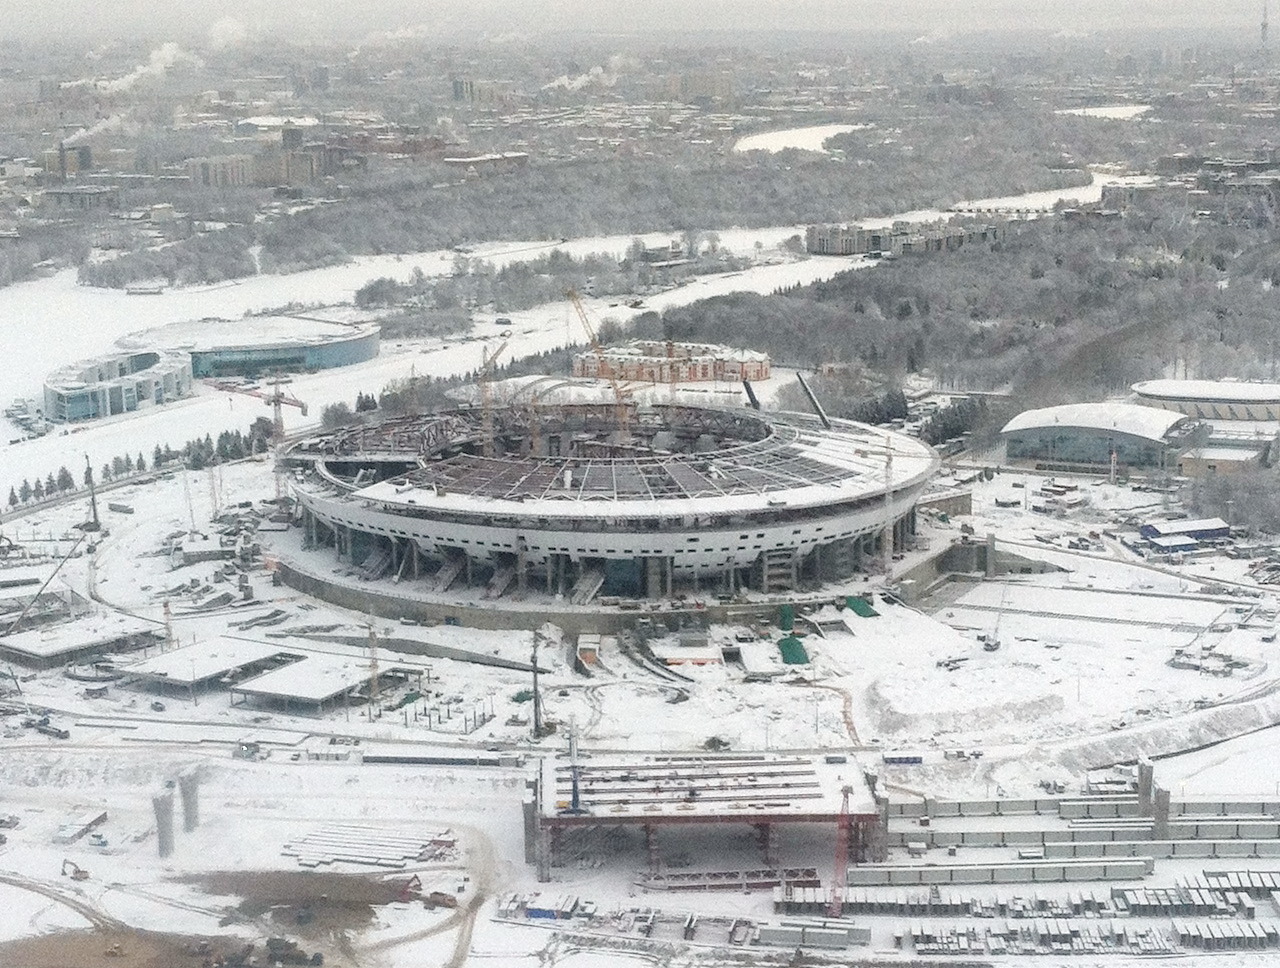 Zenit Arena – The Billion-Euro Debacle